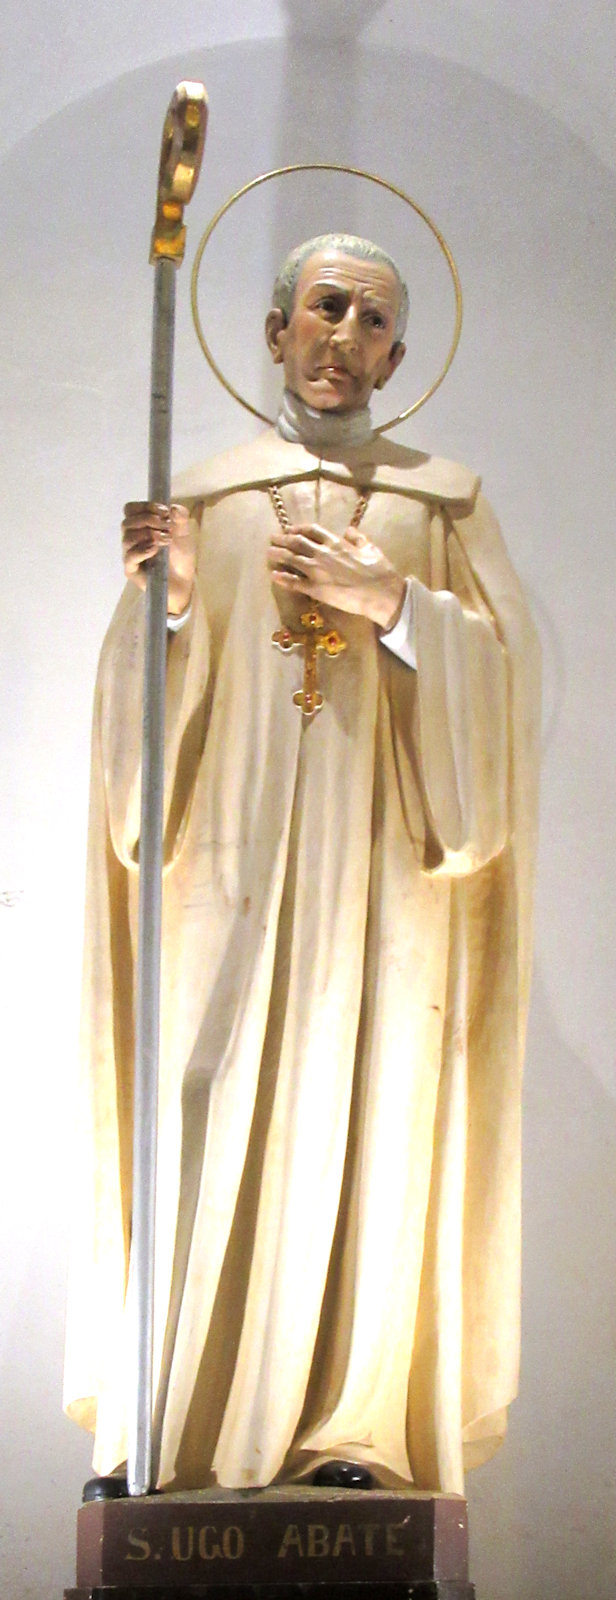 Statue im alten Kloster Santa Maria di Nucaria